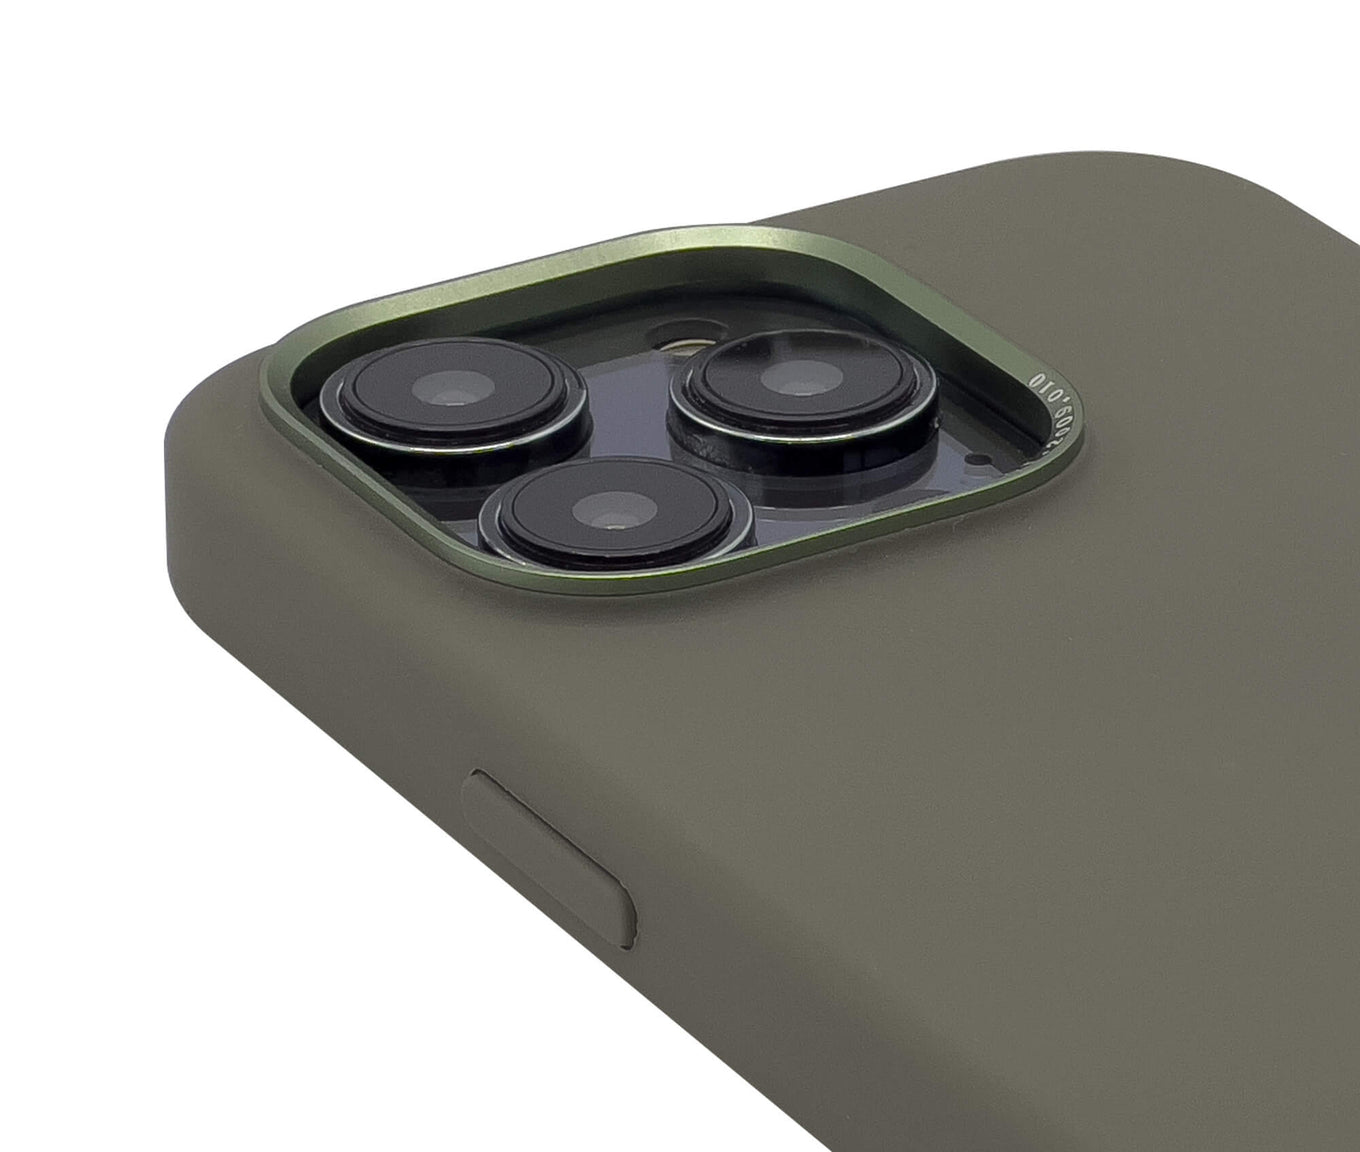 Decoded iPhone 14 Pro Max, silicone hoesje antibacterieel, olijf